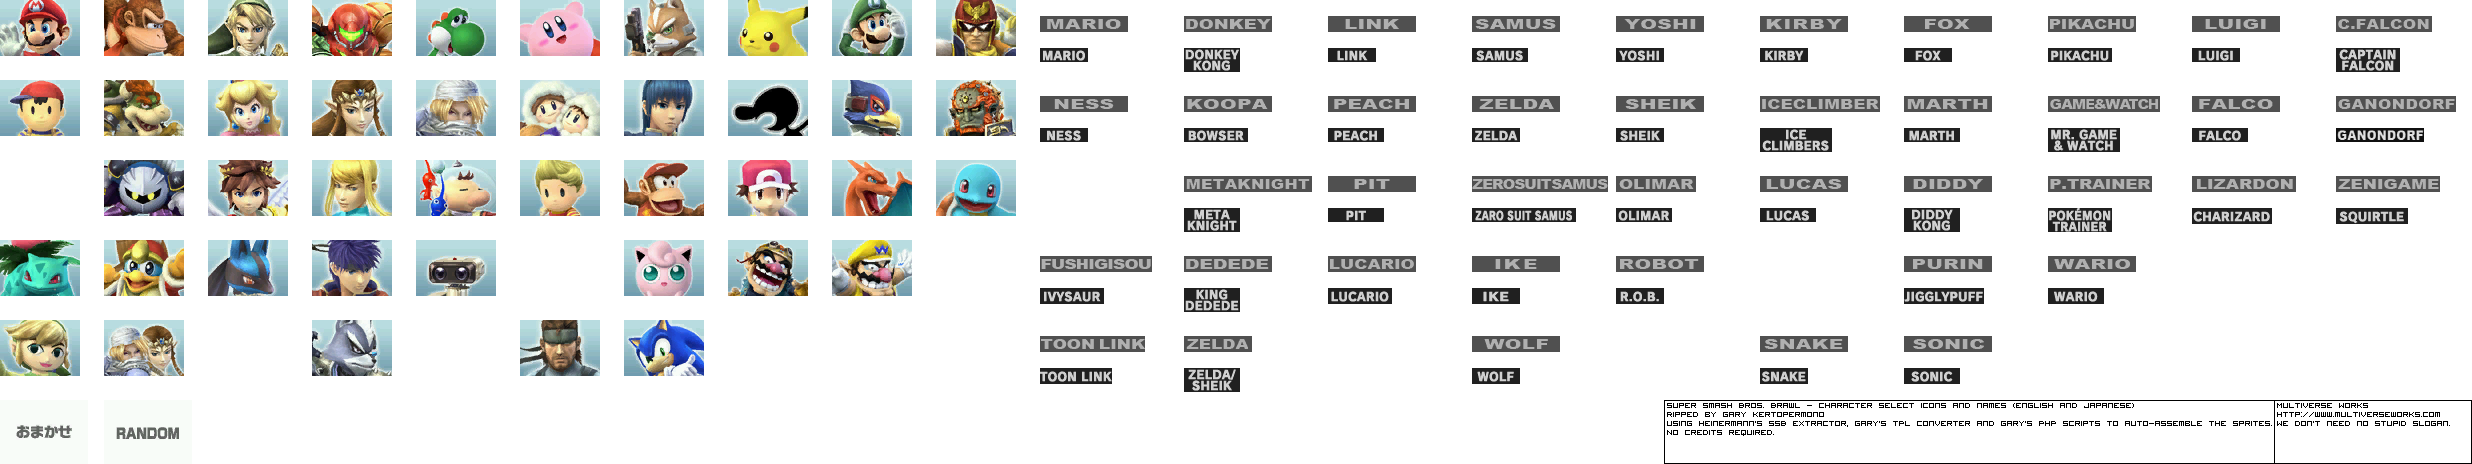 Super Smash Bros. Brawl - Character Select Icons